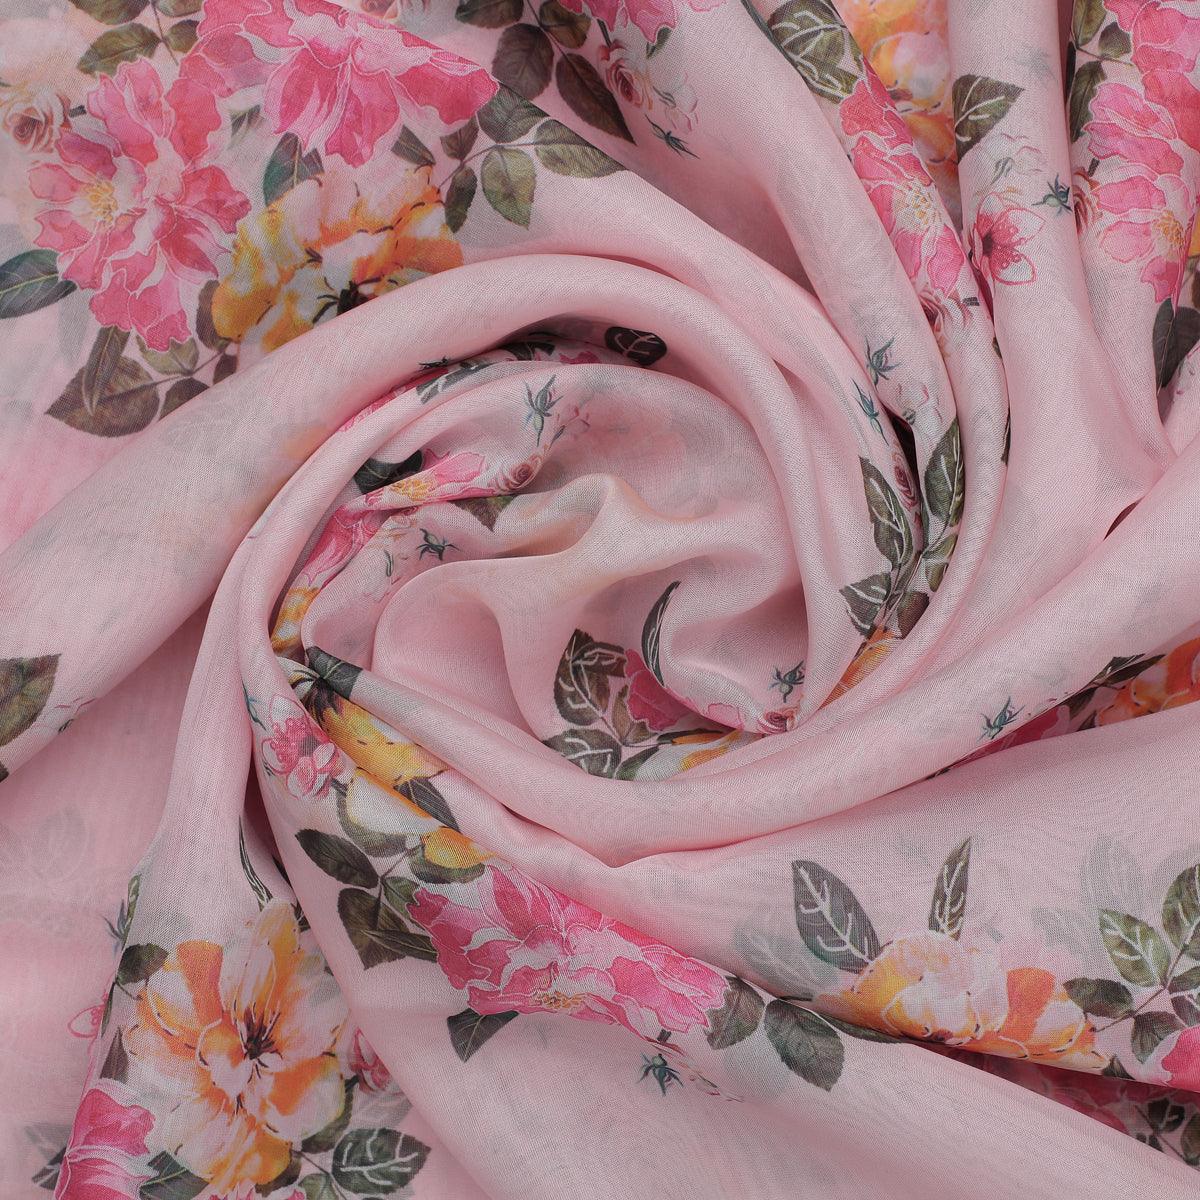 Colorful Floral Peach-Base Digital Printed Fabric - Organza - FAB VOGUE Studio®